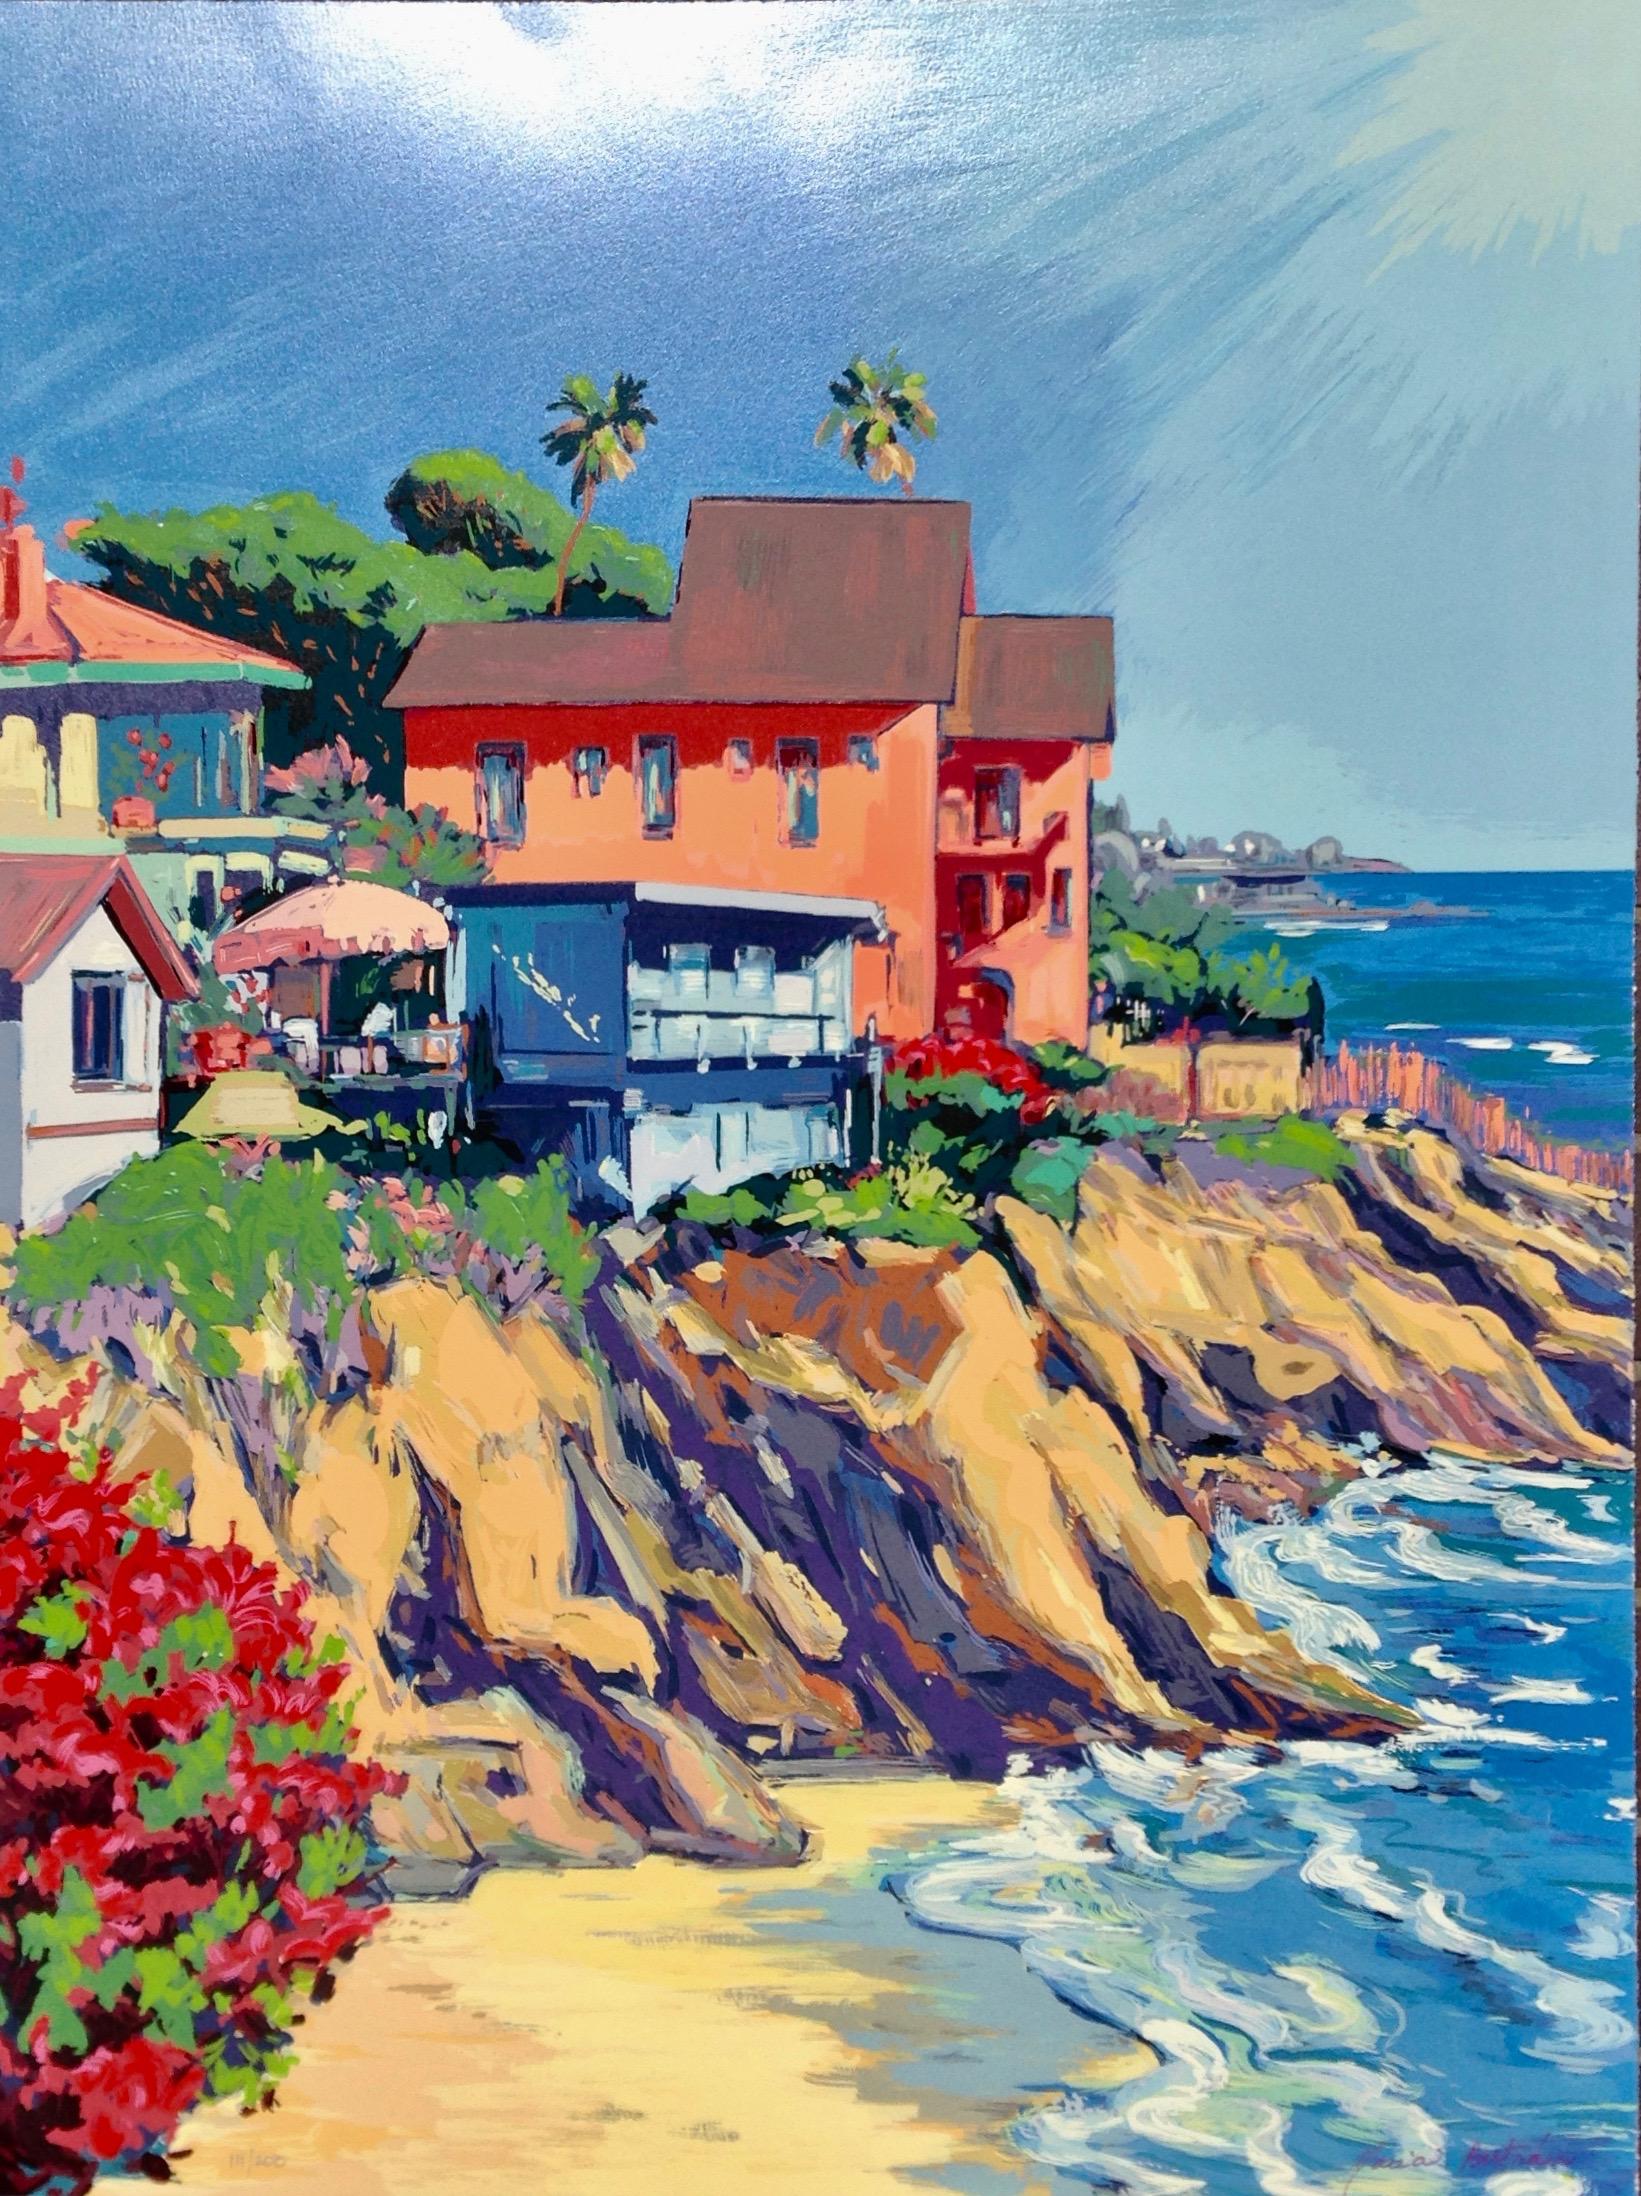 Maria Bertrán Landscape Print - "Woods Cove" Contemporary Impressionist Serigraph of Laguna Beach